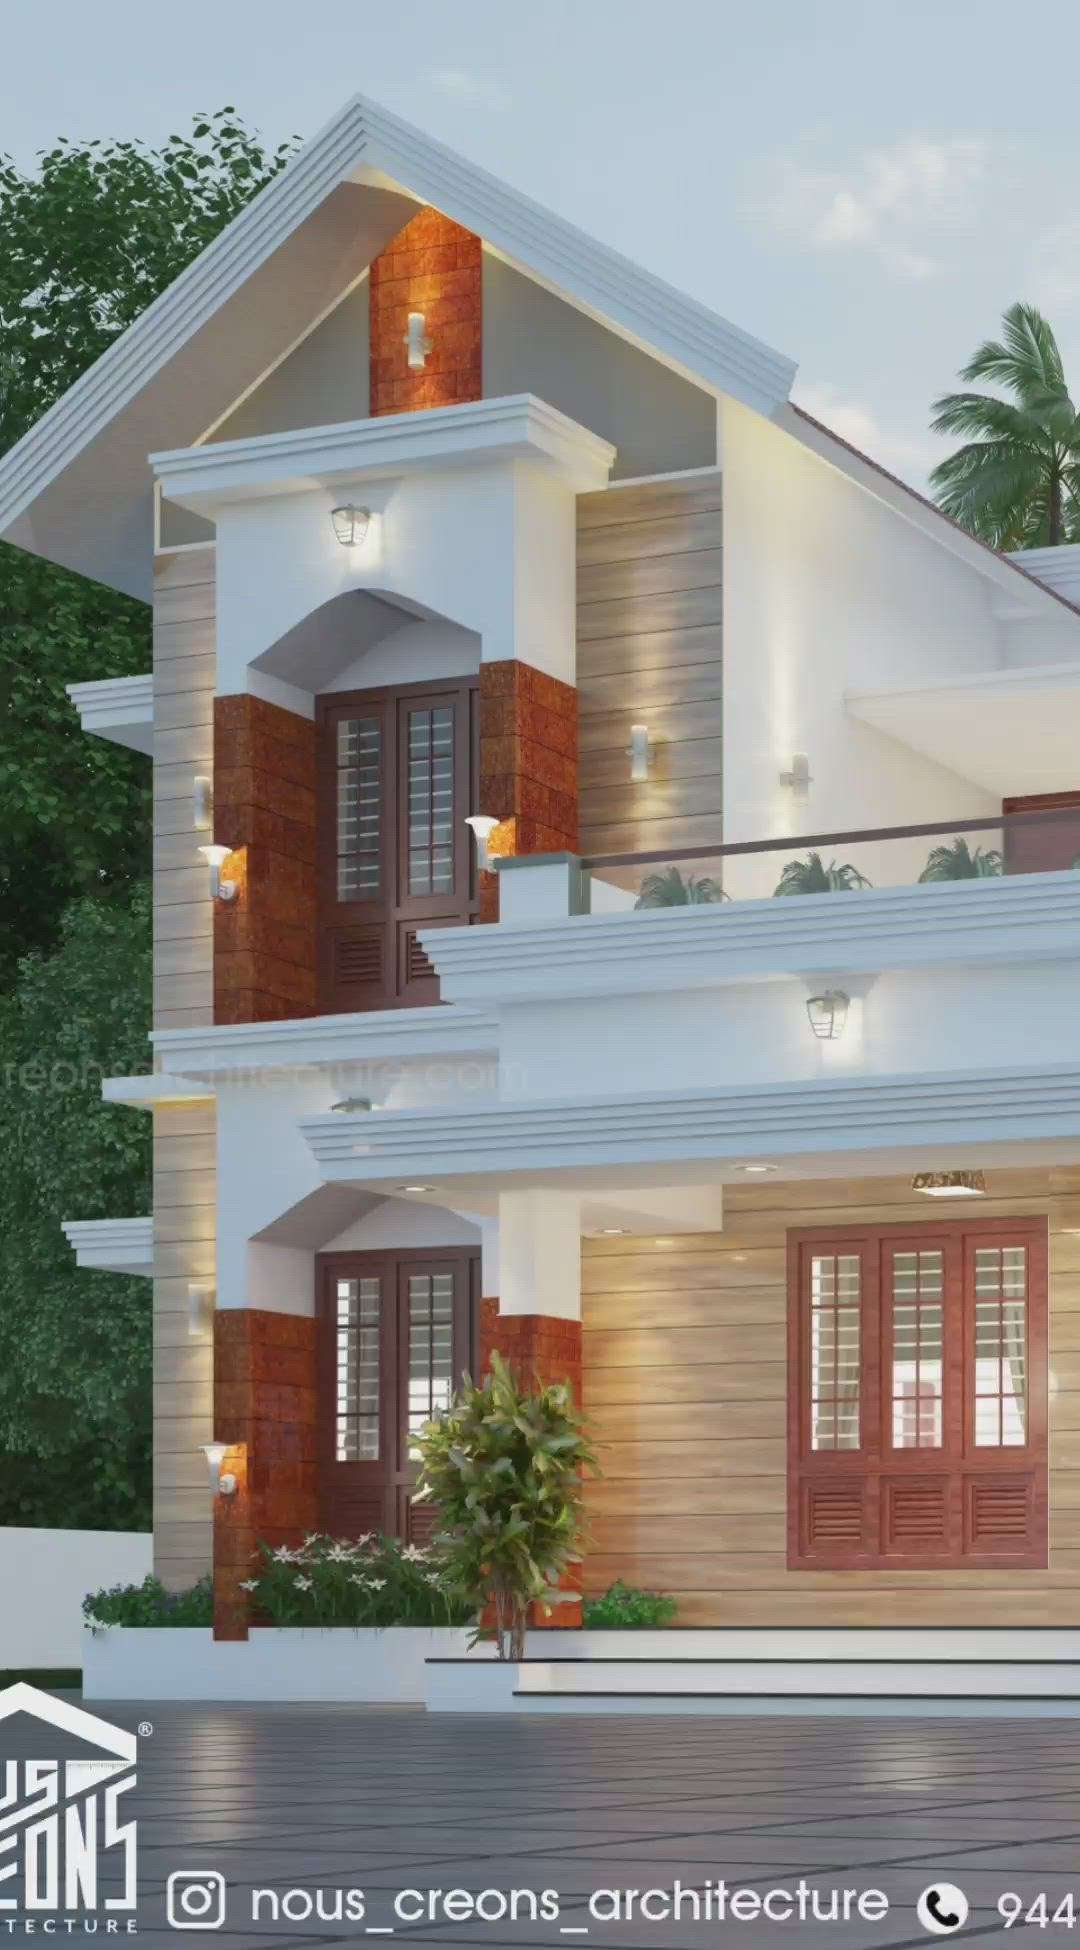 𝒩𝑒𝓌 𝑅𝑒𝓈𝒾𝒹𝑒𝓃𝒸𝑒 @ 𝒜𝓃𝒿𝓊𝓀𝓊𝓃𝓃𝓊
𝓐𝓻𝓮𝓪 : 1905 𝓼𝓺𝓯𝓽
4 𝓑𝓗𝓚
#KeralaStyleHouse  #keralaplanners #keralaarchitectures #keralahousedesign #HouseDesigns #architecturedesigns #Wayanad